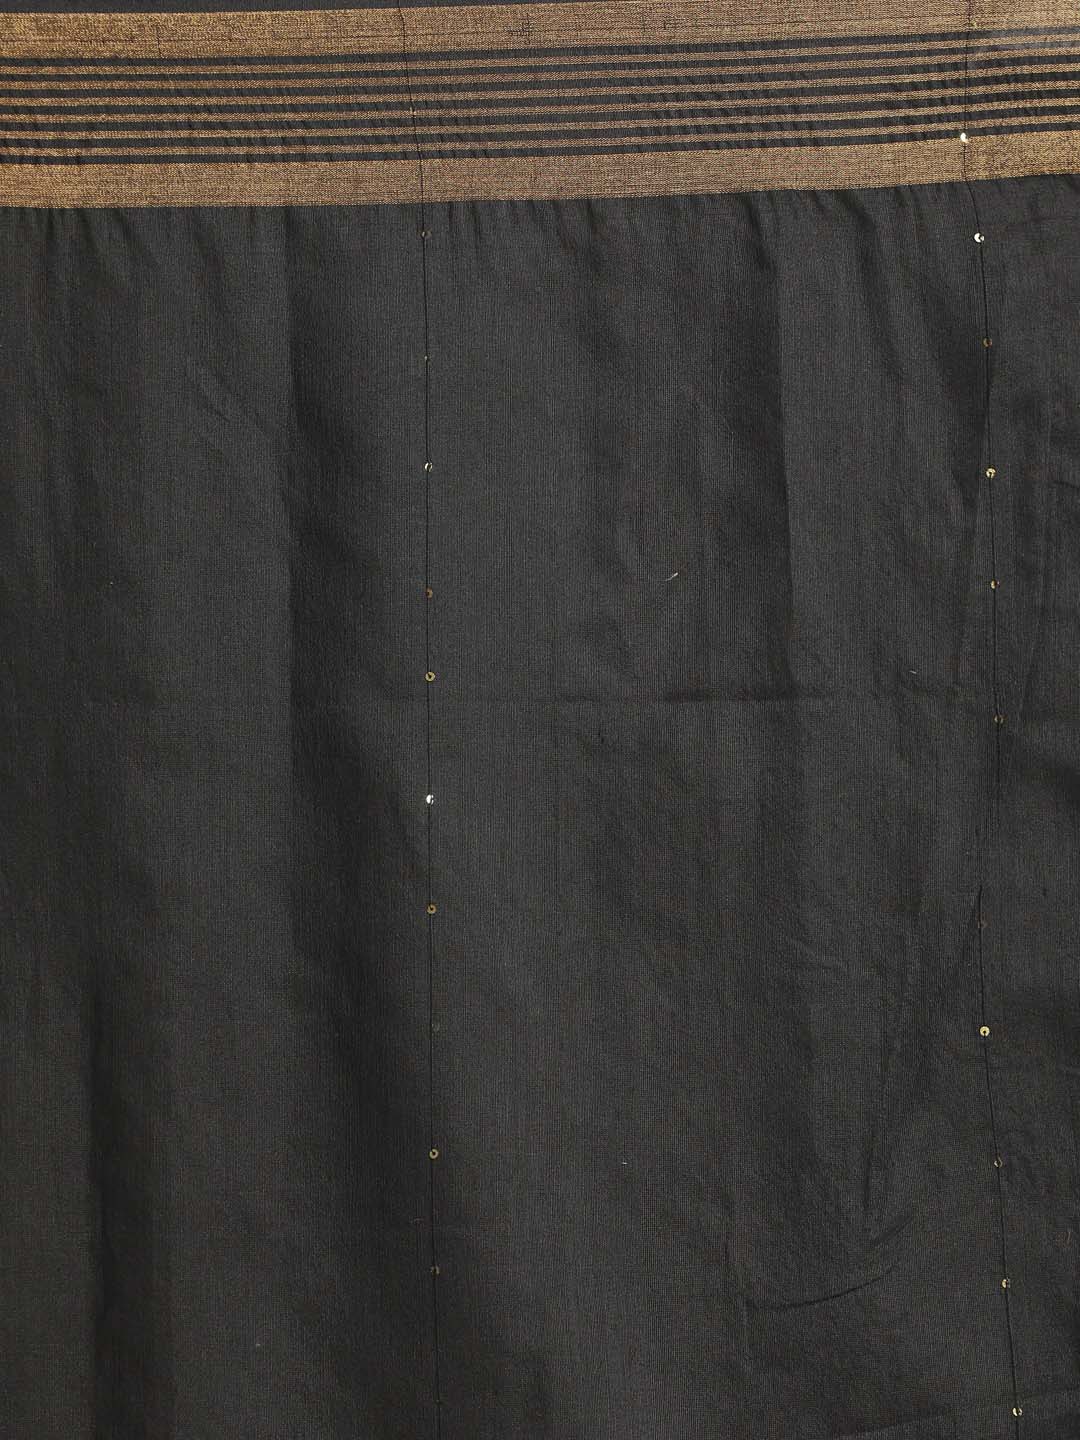 Indethnic Black Bengal Handloom Cotton Blend Party Saree - Saree Detail View